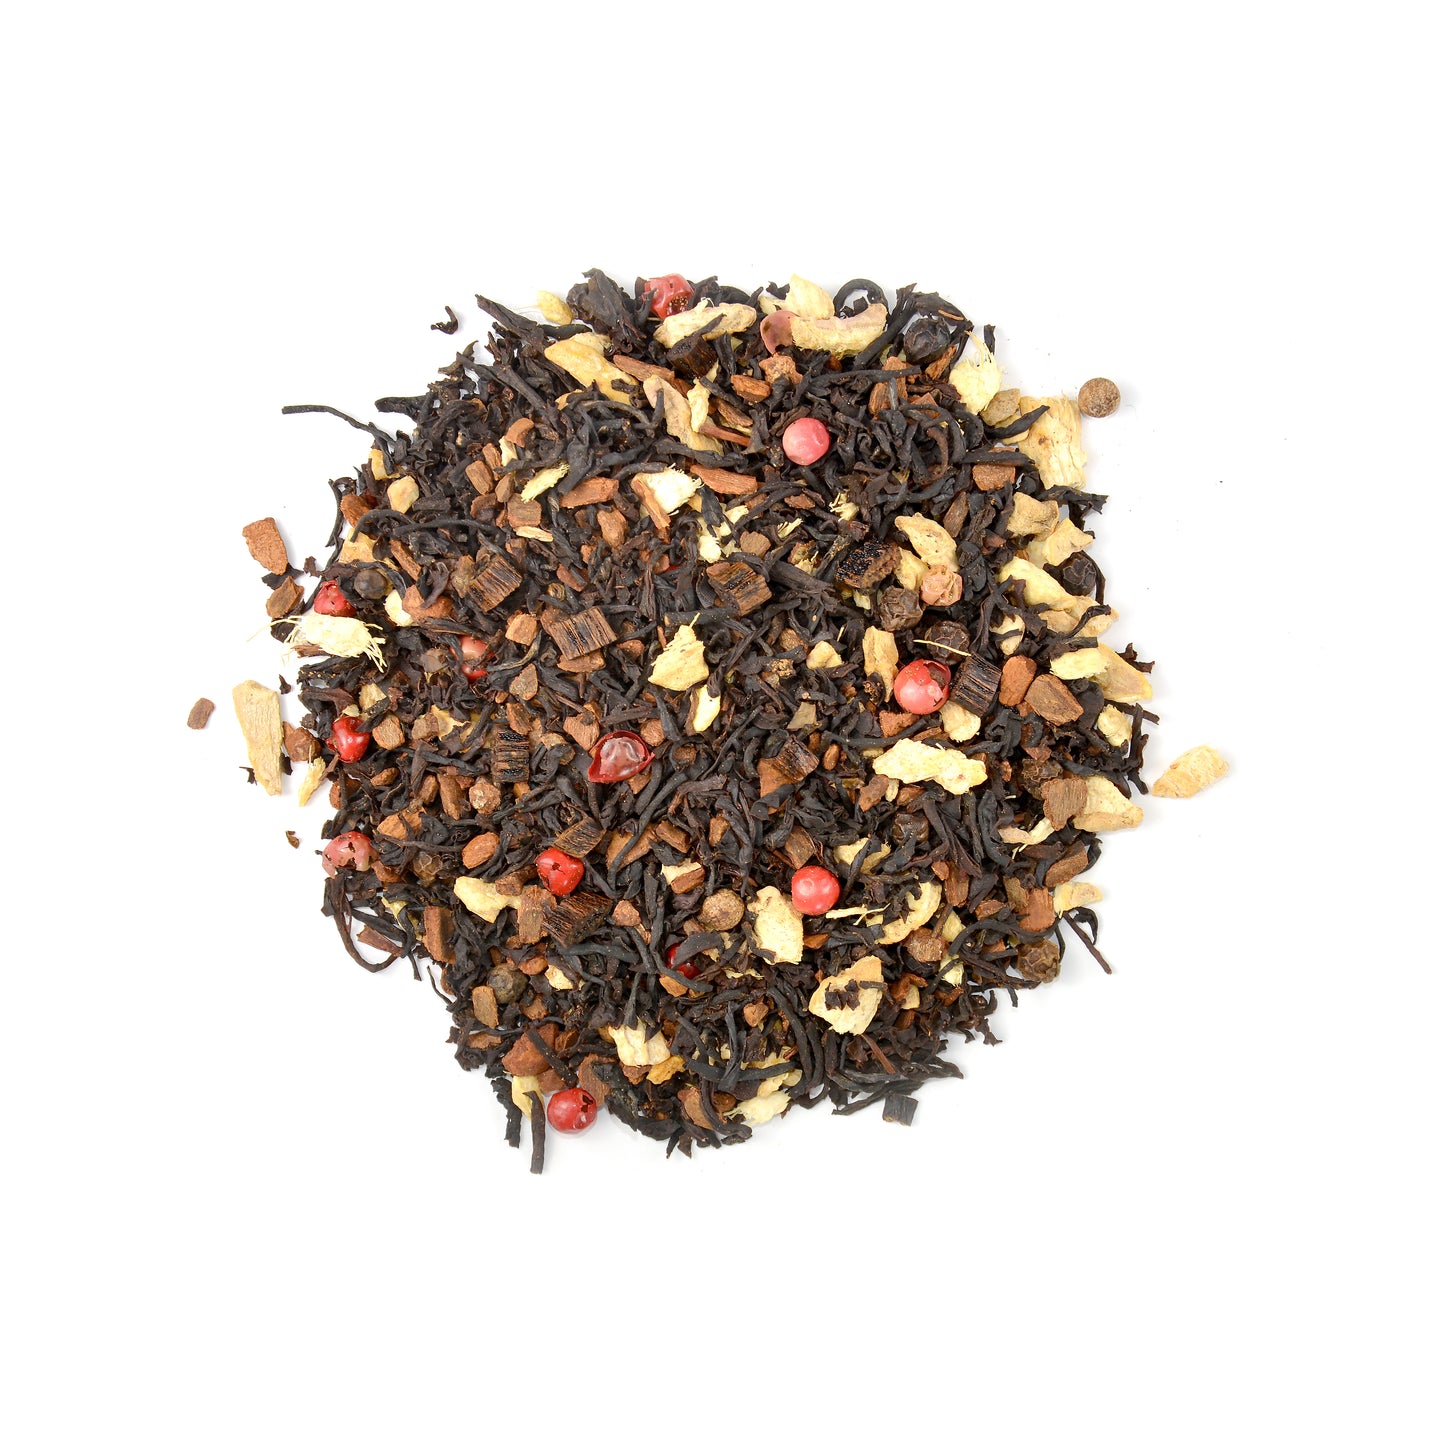 Soul of Sri Lanka 25 g (organic) tea blend